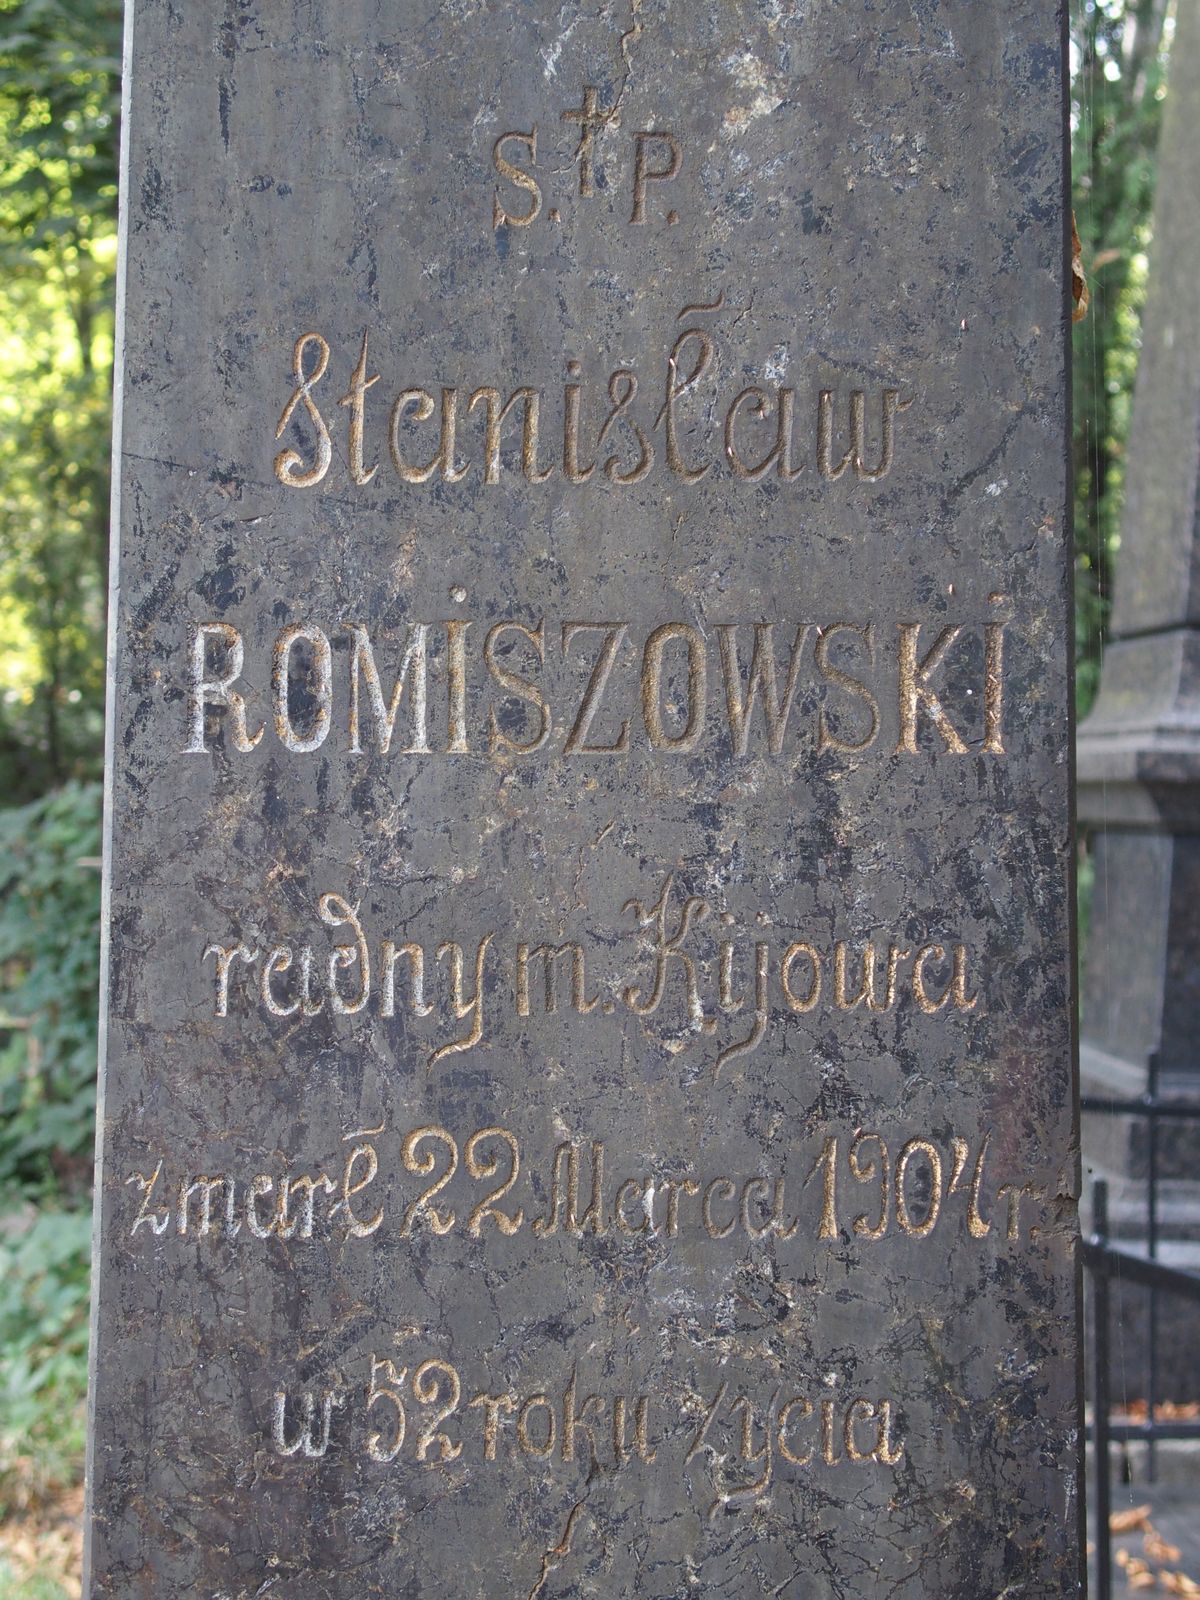 Fragment of the tomb of the Strashchinsky and Romishovsky families, Baikhkova cemetery in Kiev, as of 2021.